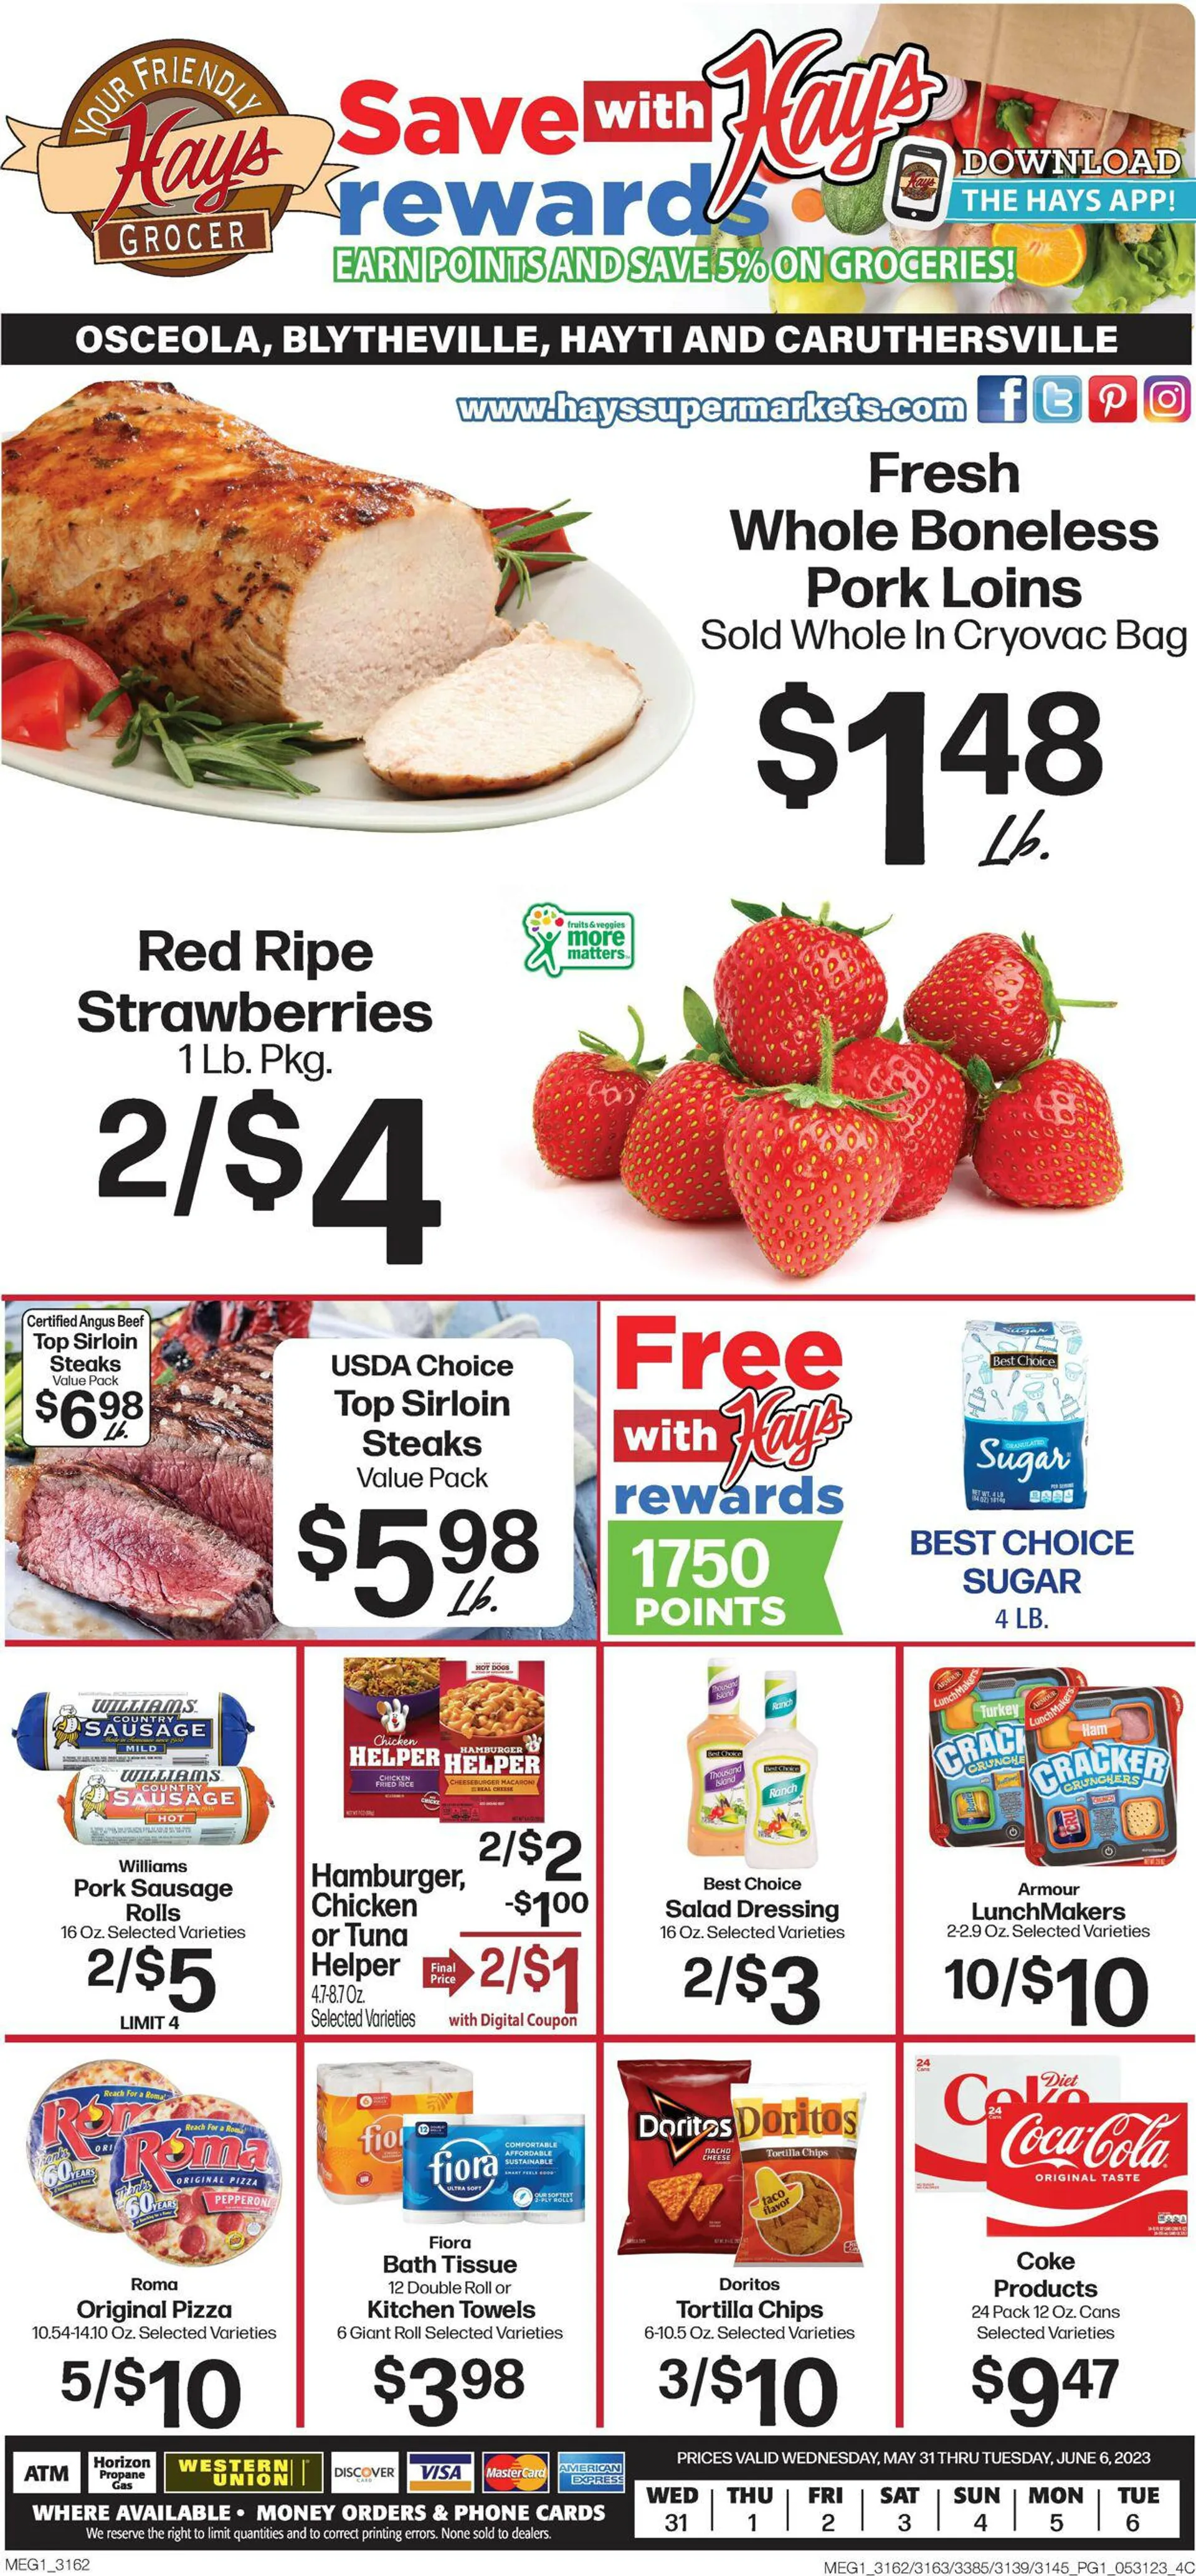 Hays Supermarket Current weekly ad - 1